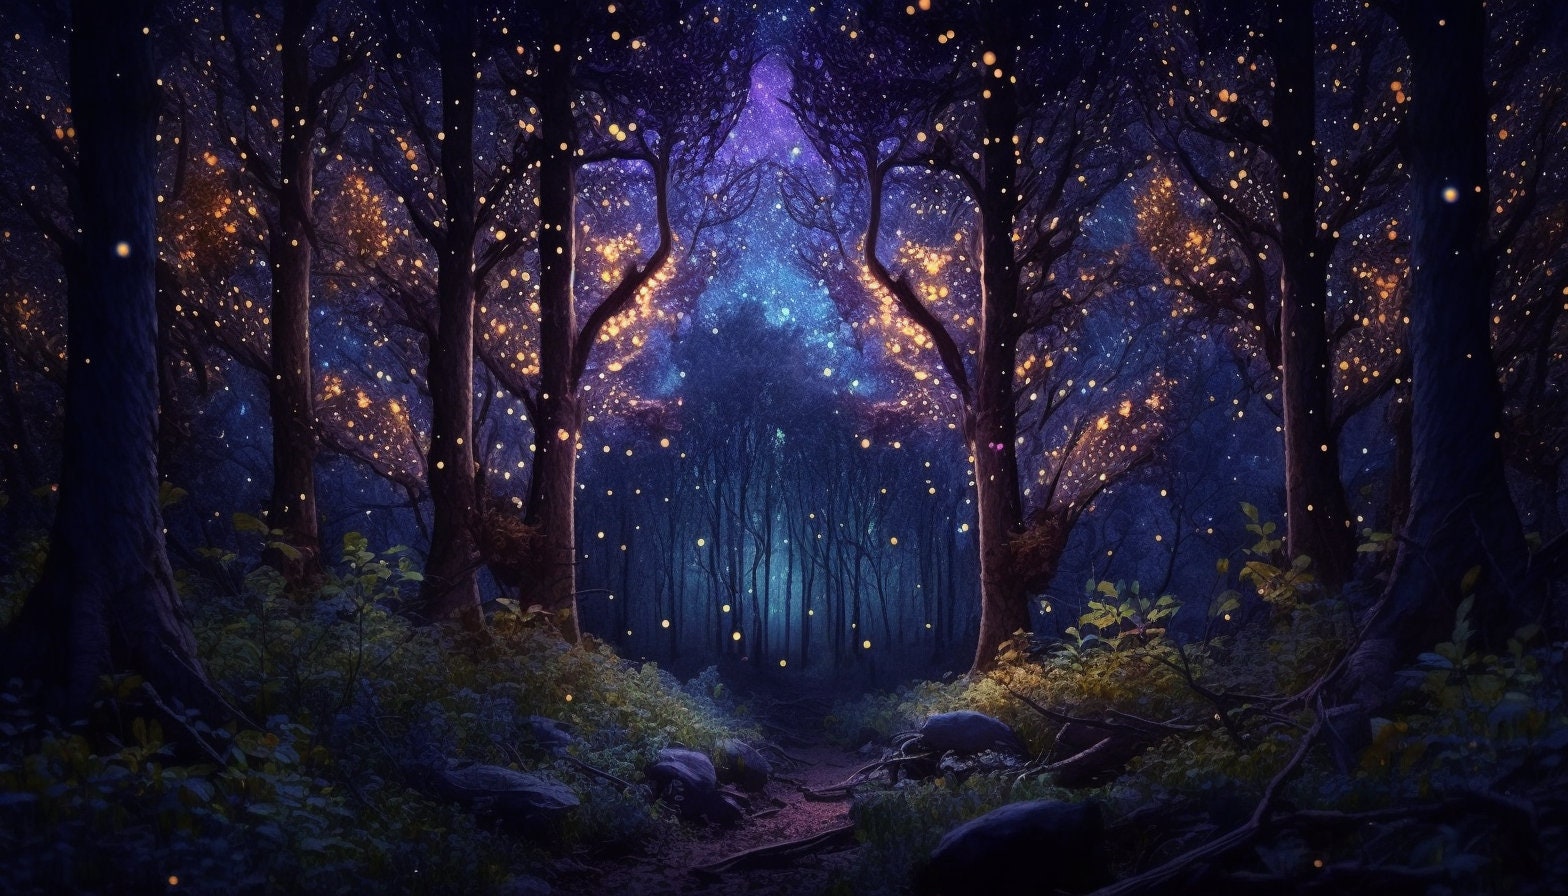 5 Night Forest Wallpaper Images Enchanted Forest Desktop - Etsy Australia